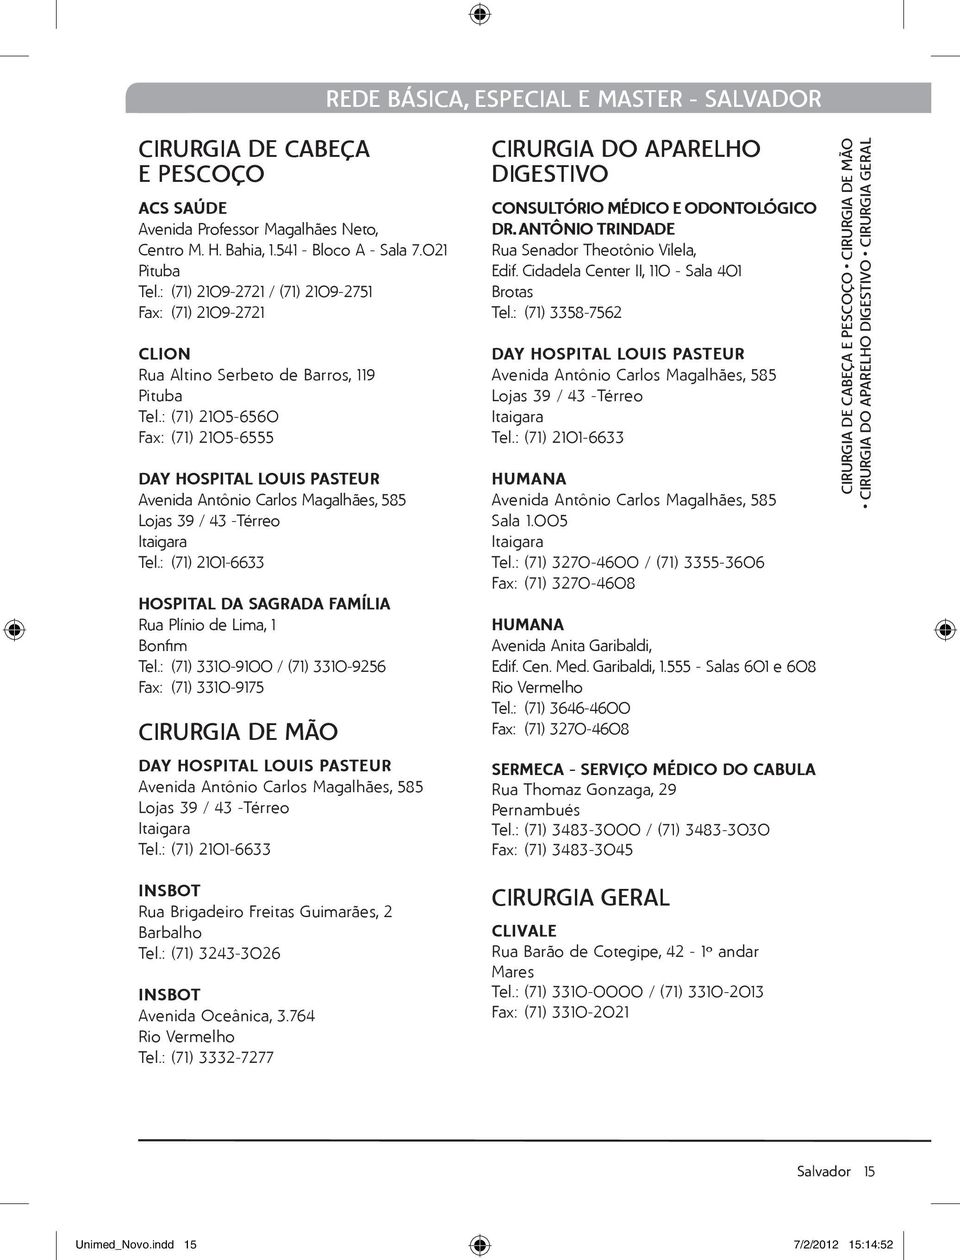 : (71) 2105-6560 Fax: (71) 2105-6555 Day Hospital Louis Pasteur Avenida Antônio Carlos Magalhães, 585 Lojas 39 / 43 -Térreo Itaigara Tel.